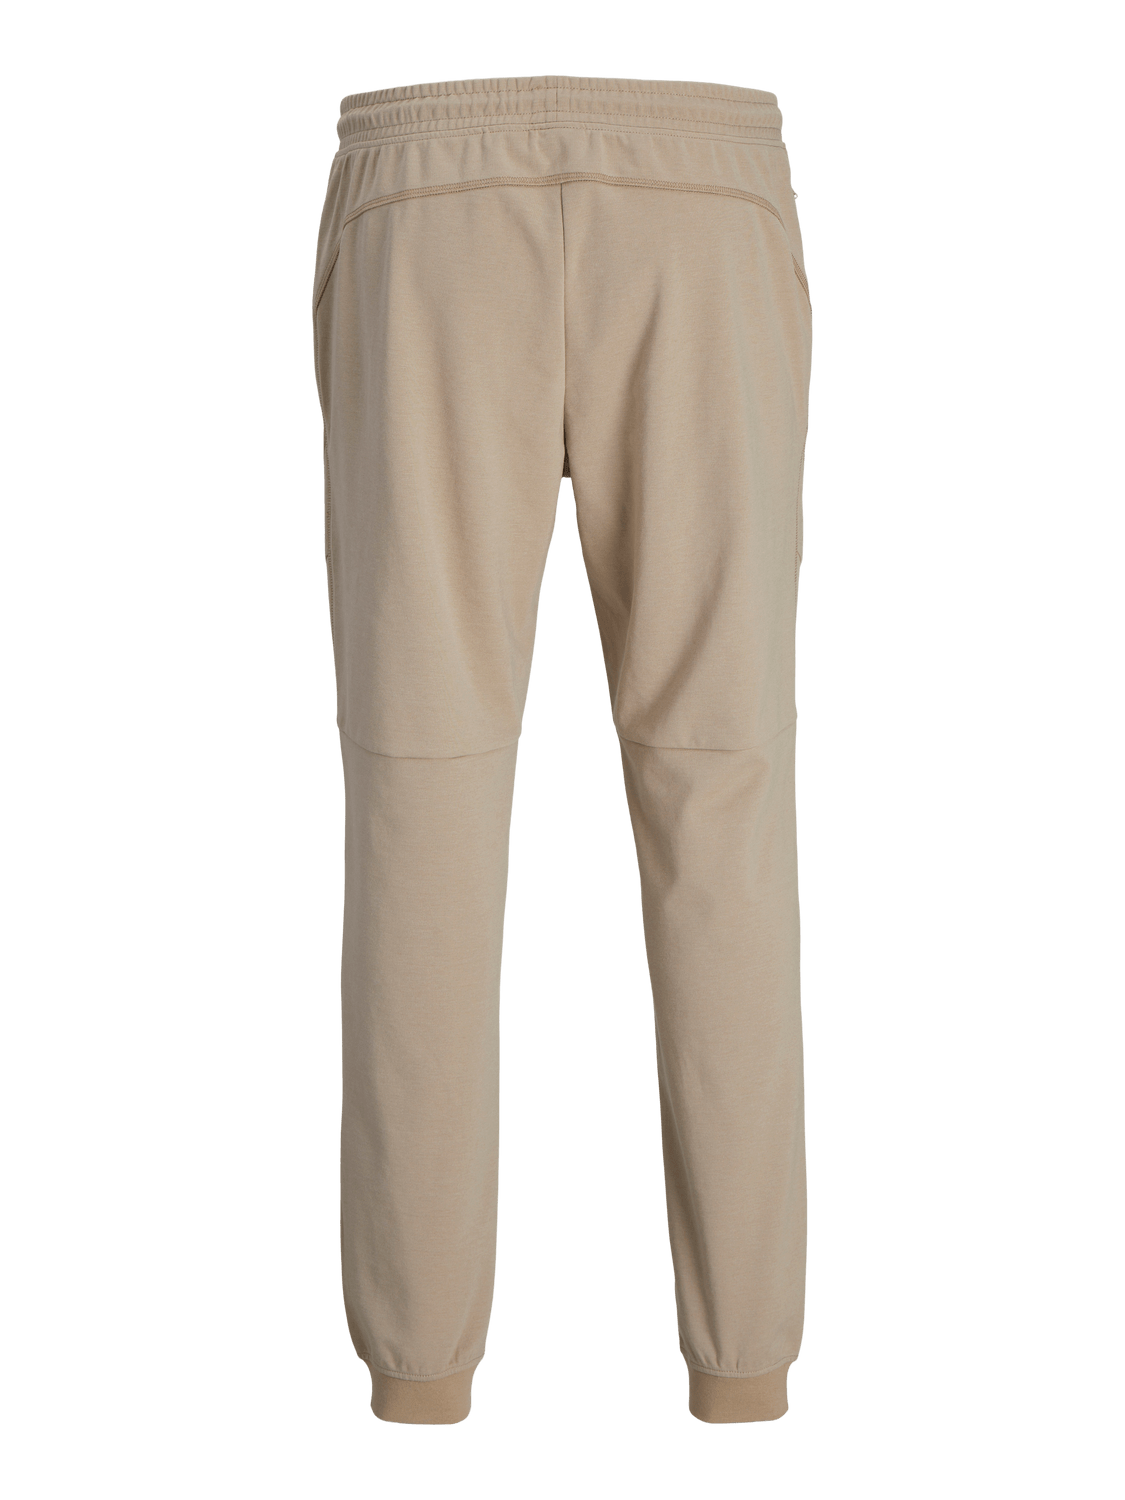 Pantalones jogger chándal beige -JPSTWILL